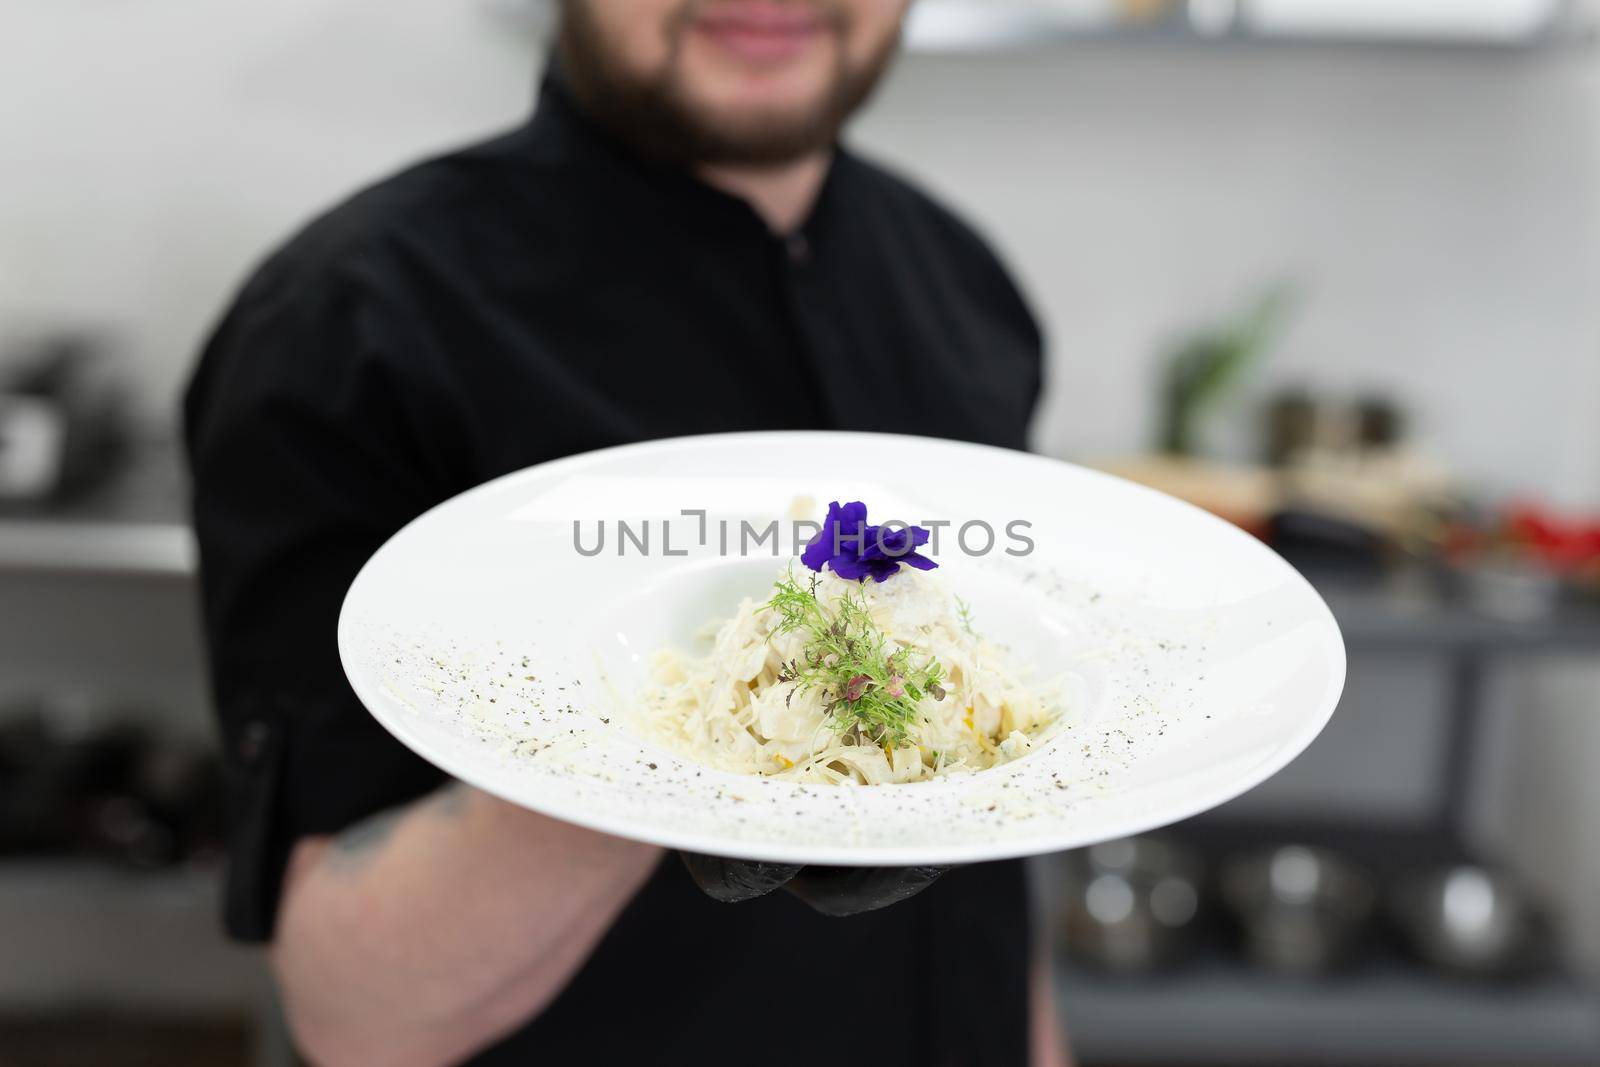 Chef presenting pasta dish in Italian restaurant kitchen.